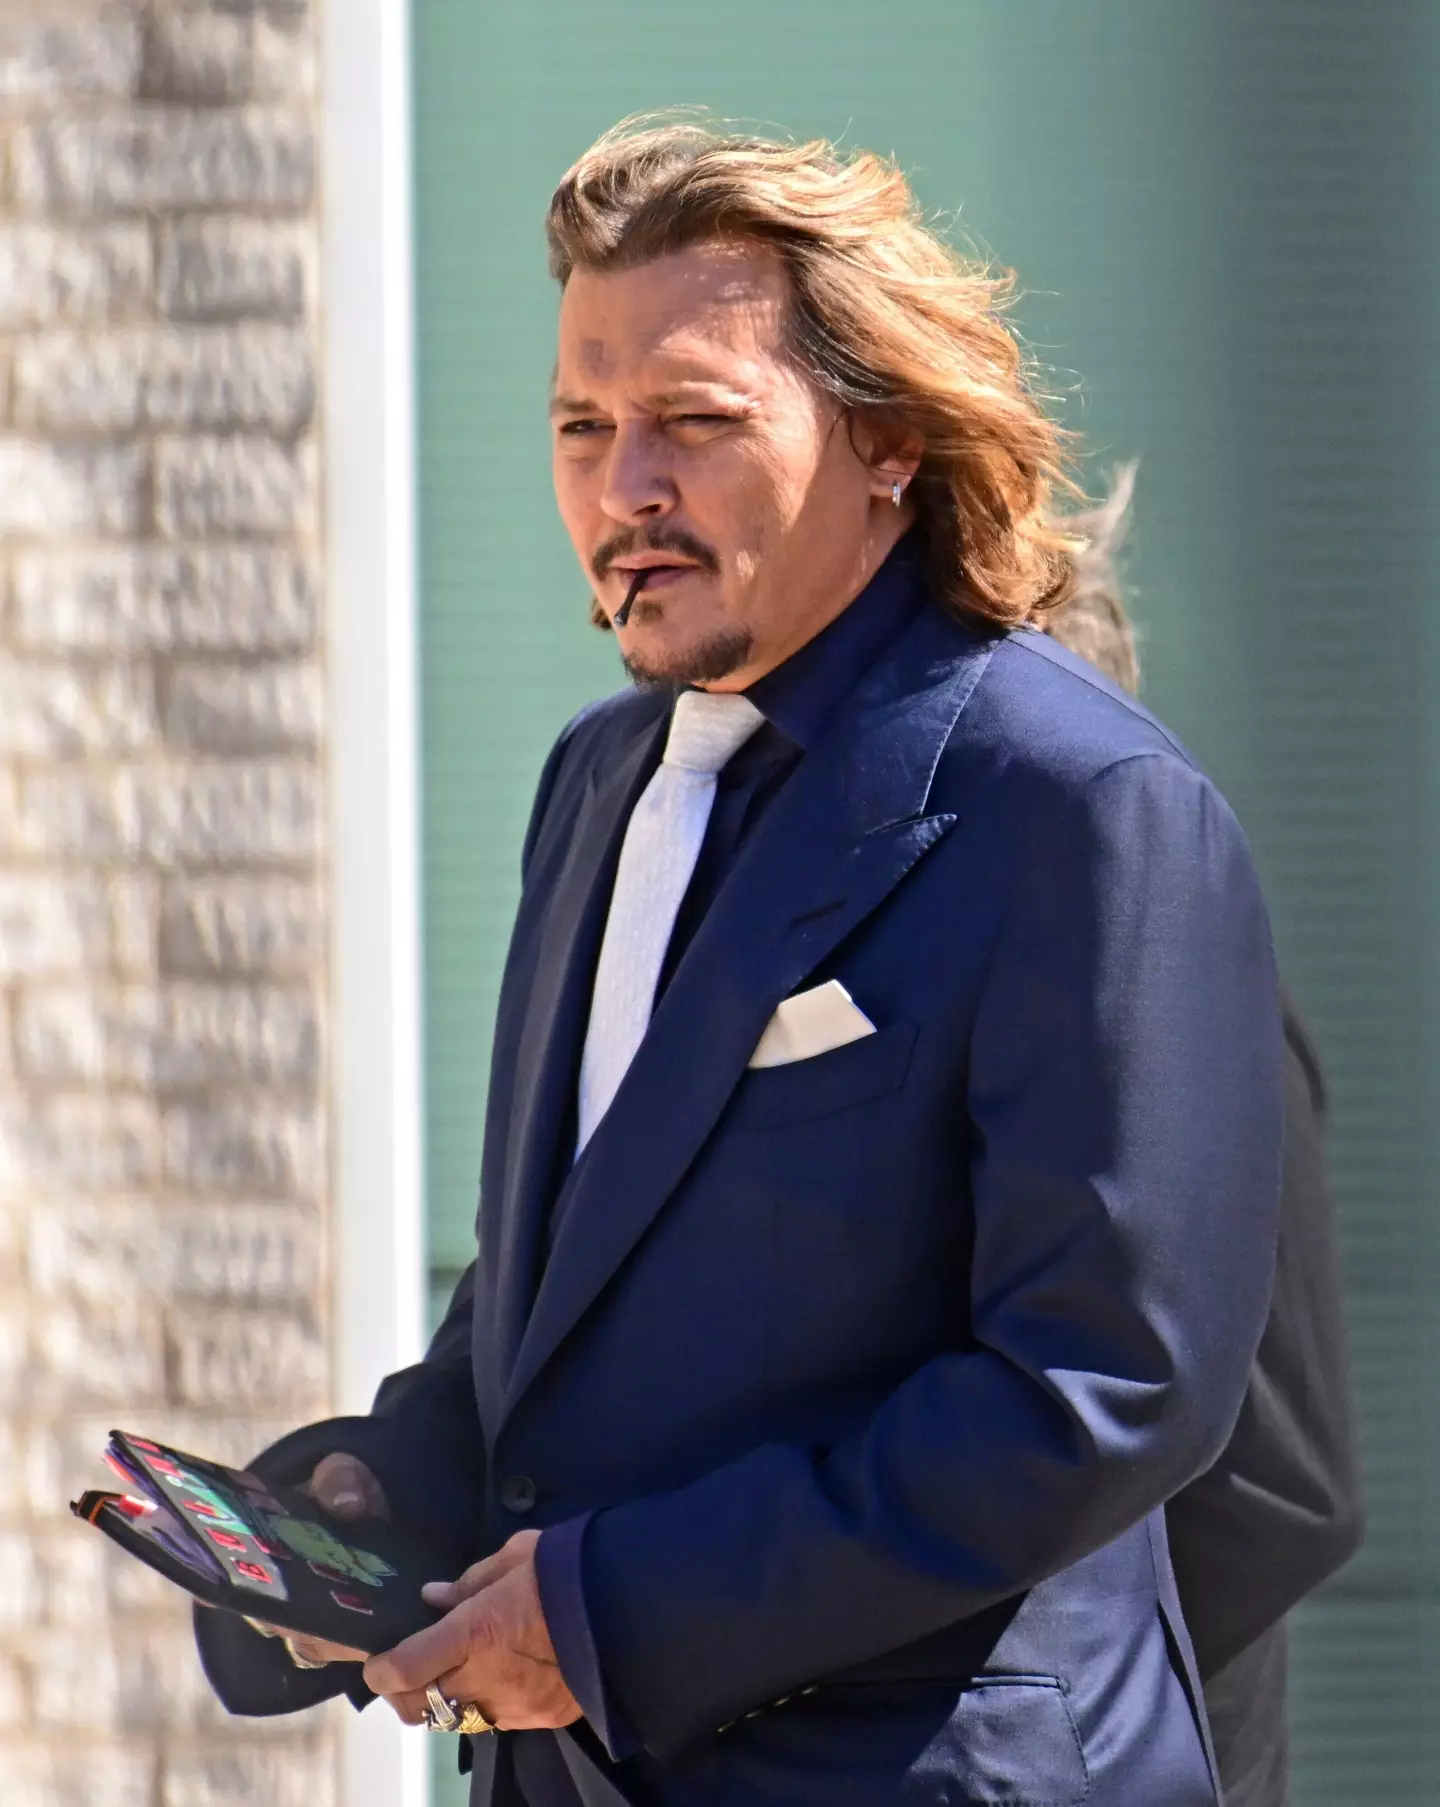 Johny Depp won the defamation trial against his ex-wife Amber Heard last year.